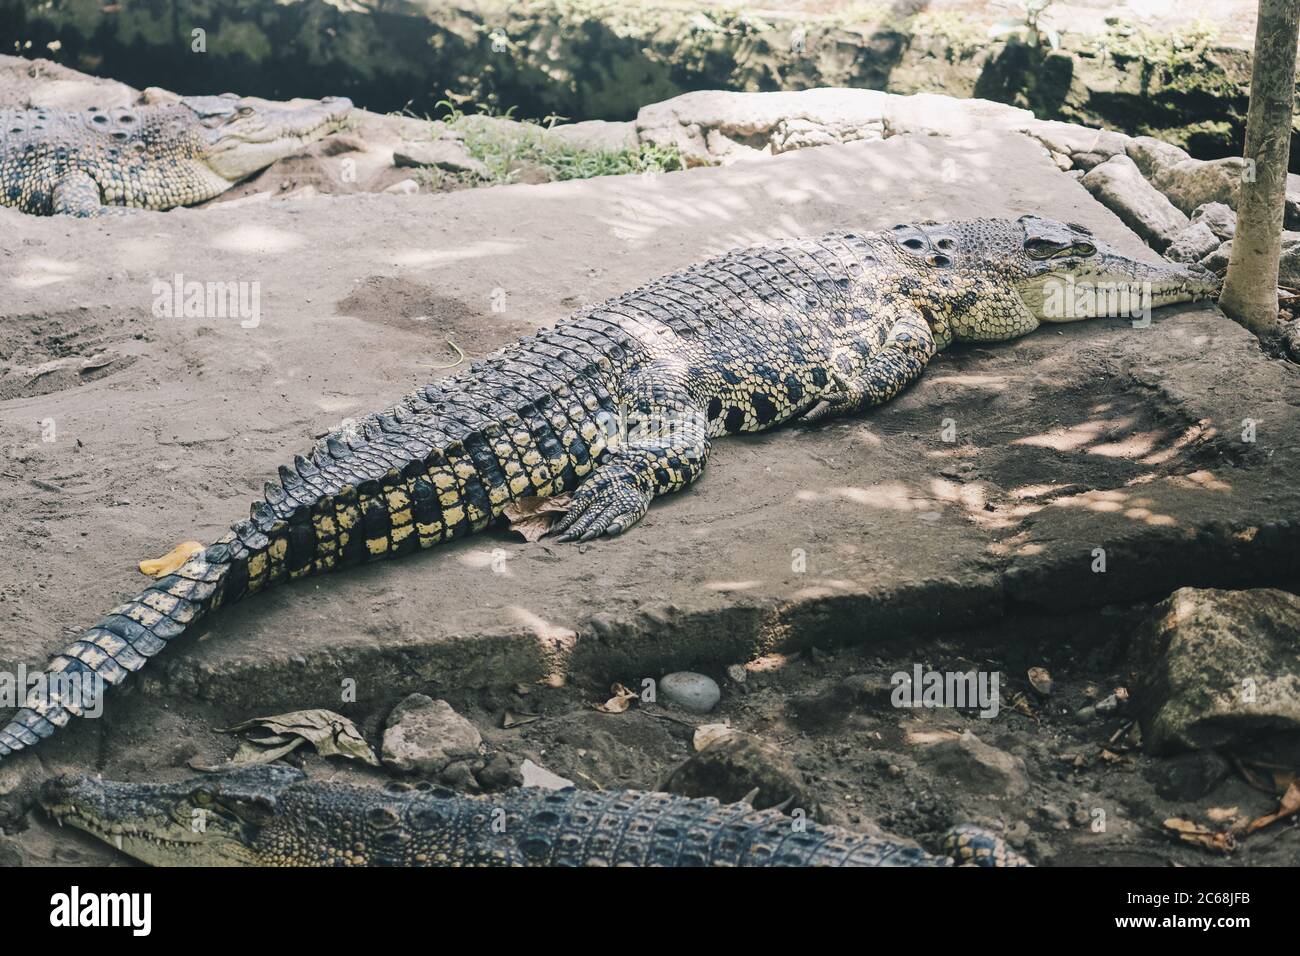 Saltwater crocodile (Crocodylus porosus) or Saltwater crocodile or Indo Australian crocodile or Man-eater sunbathing at the swamp Stock Photo - Alamy